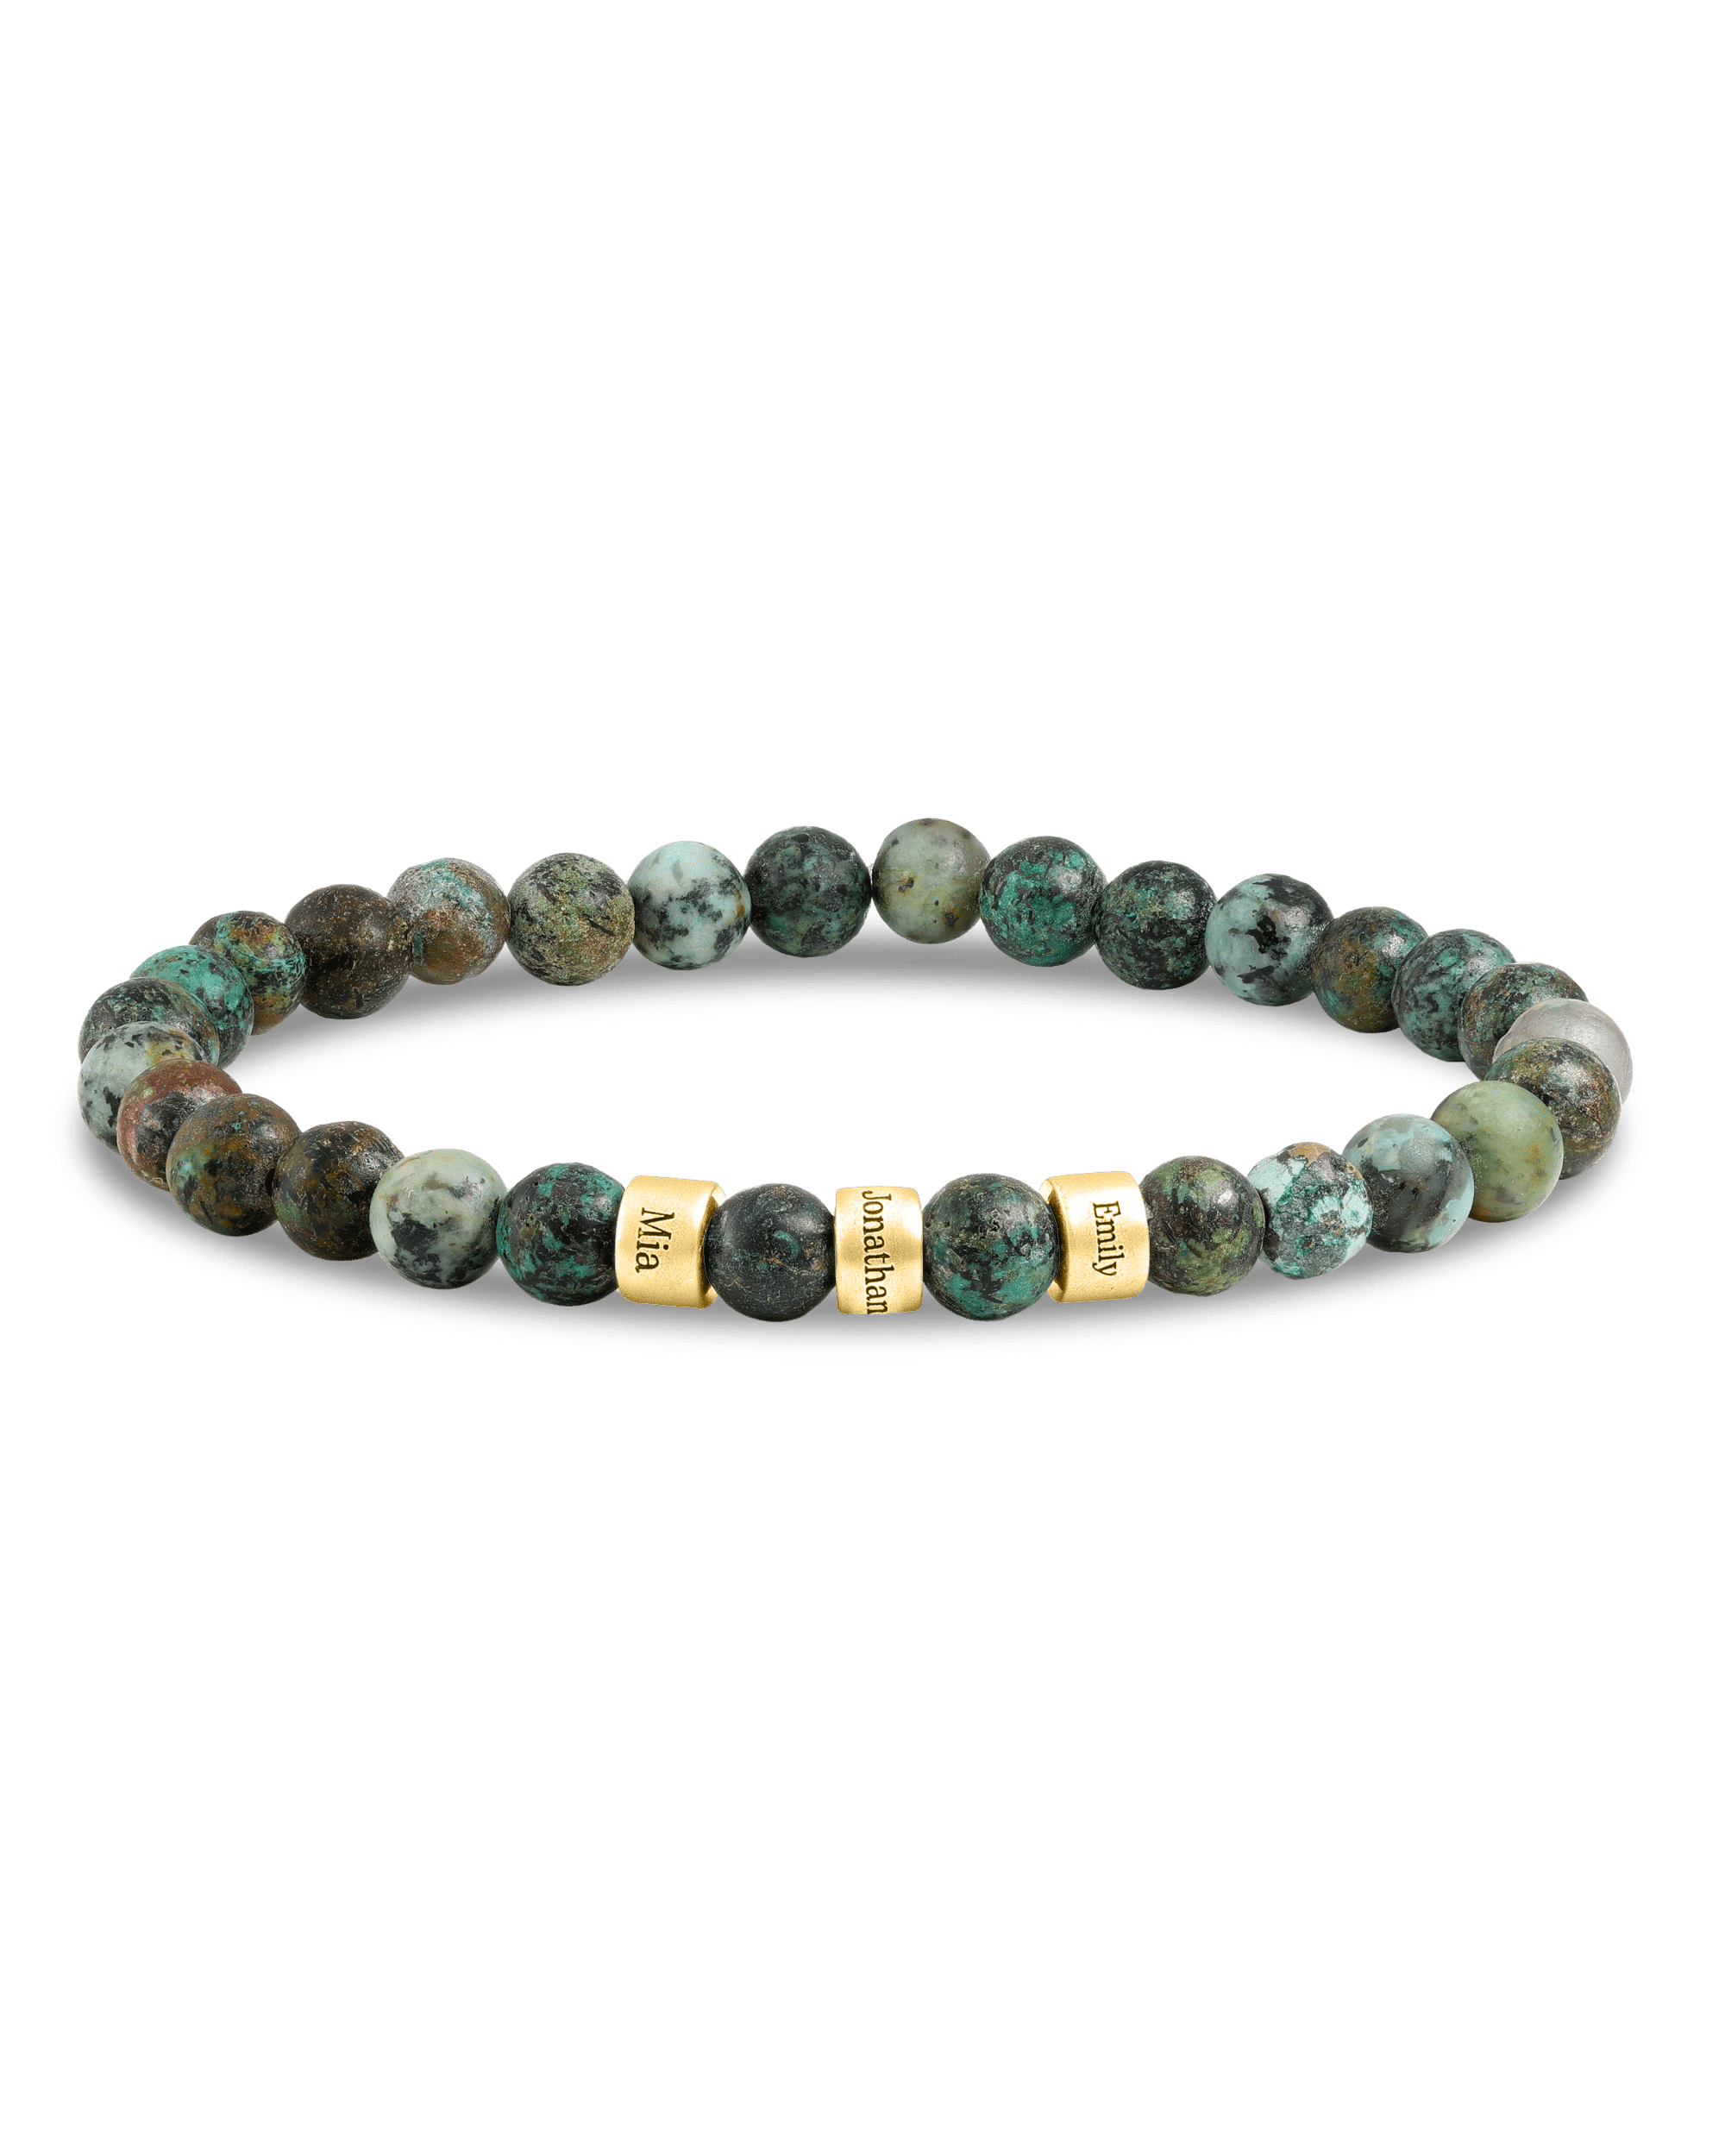 Dad's Legacy Beads Bracelet w/ Black Onyx Stones - 925 Sterling Silver Bracelets magal-dev 